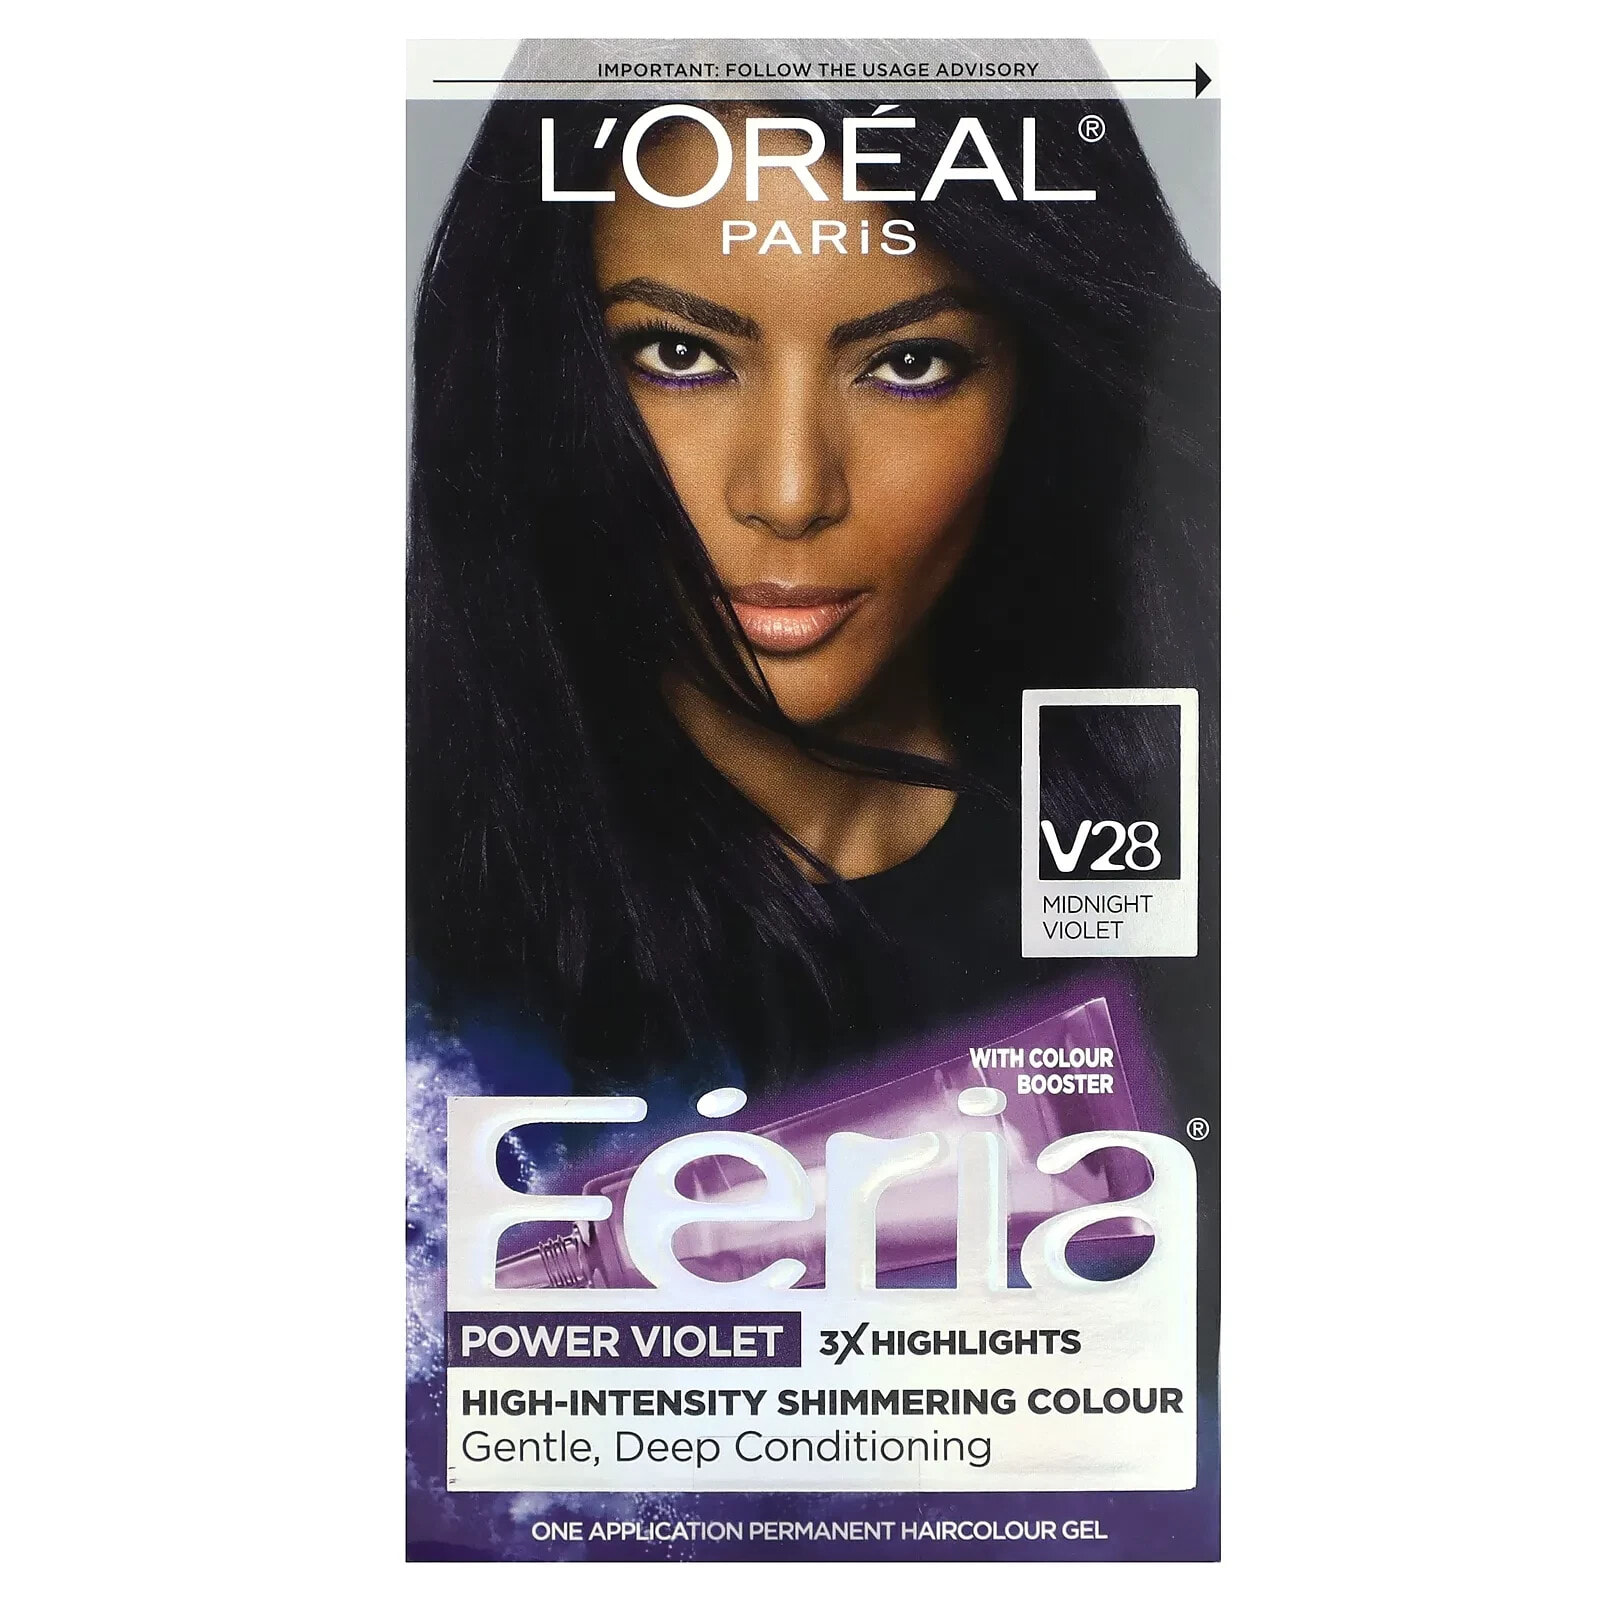 Feria, Power Violet, High-Intensity Shimmering Colour, V28 Midnight Violet, 1 Application